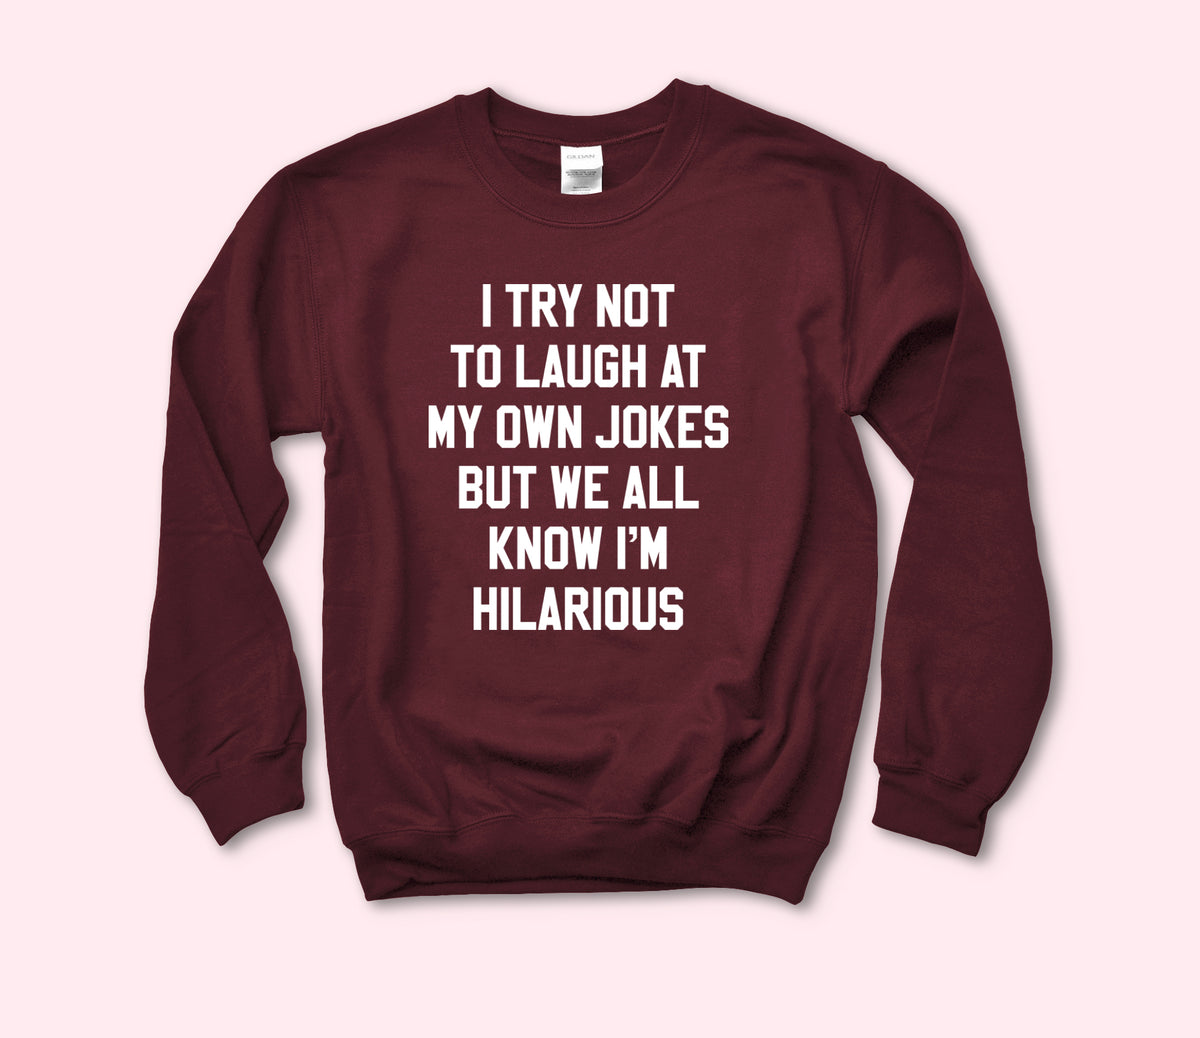 We All Know I'm Hilarious Sweatshirt